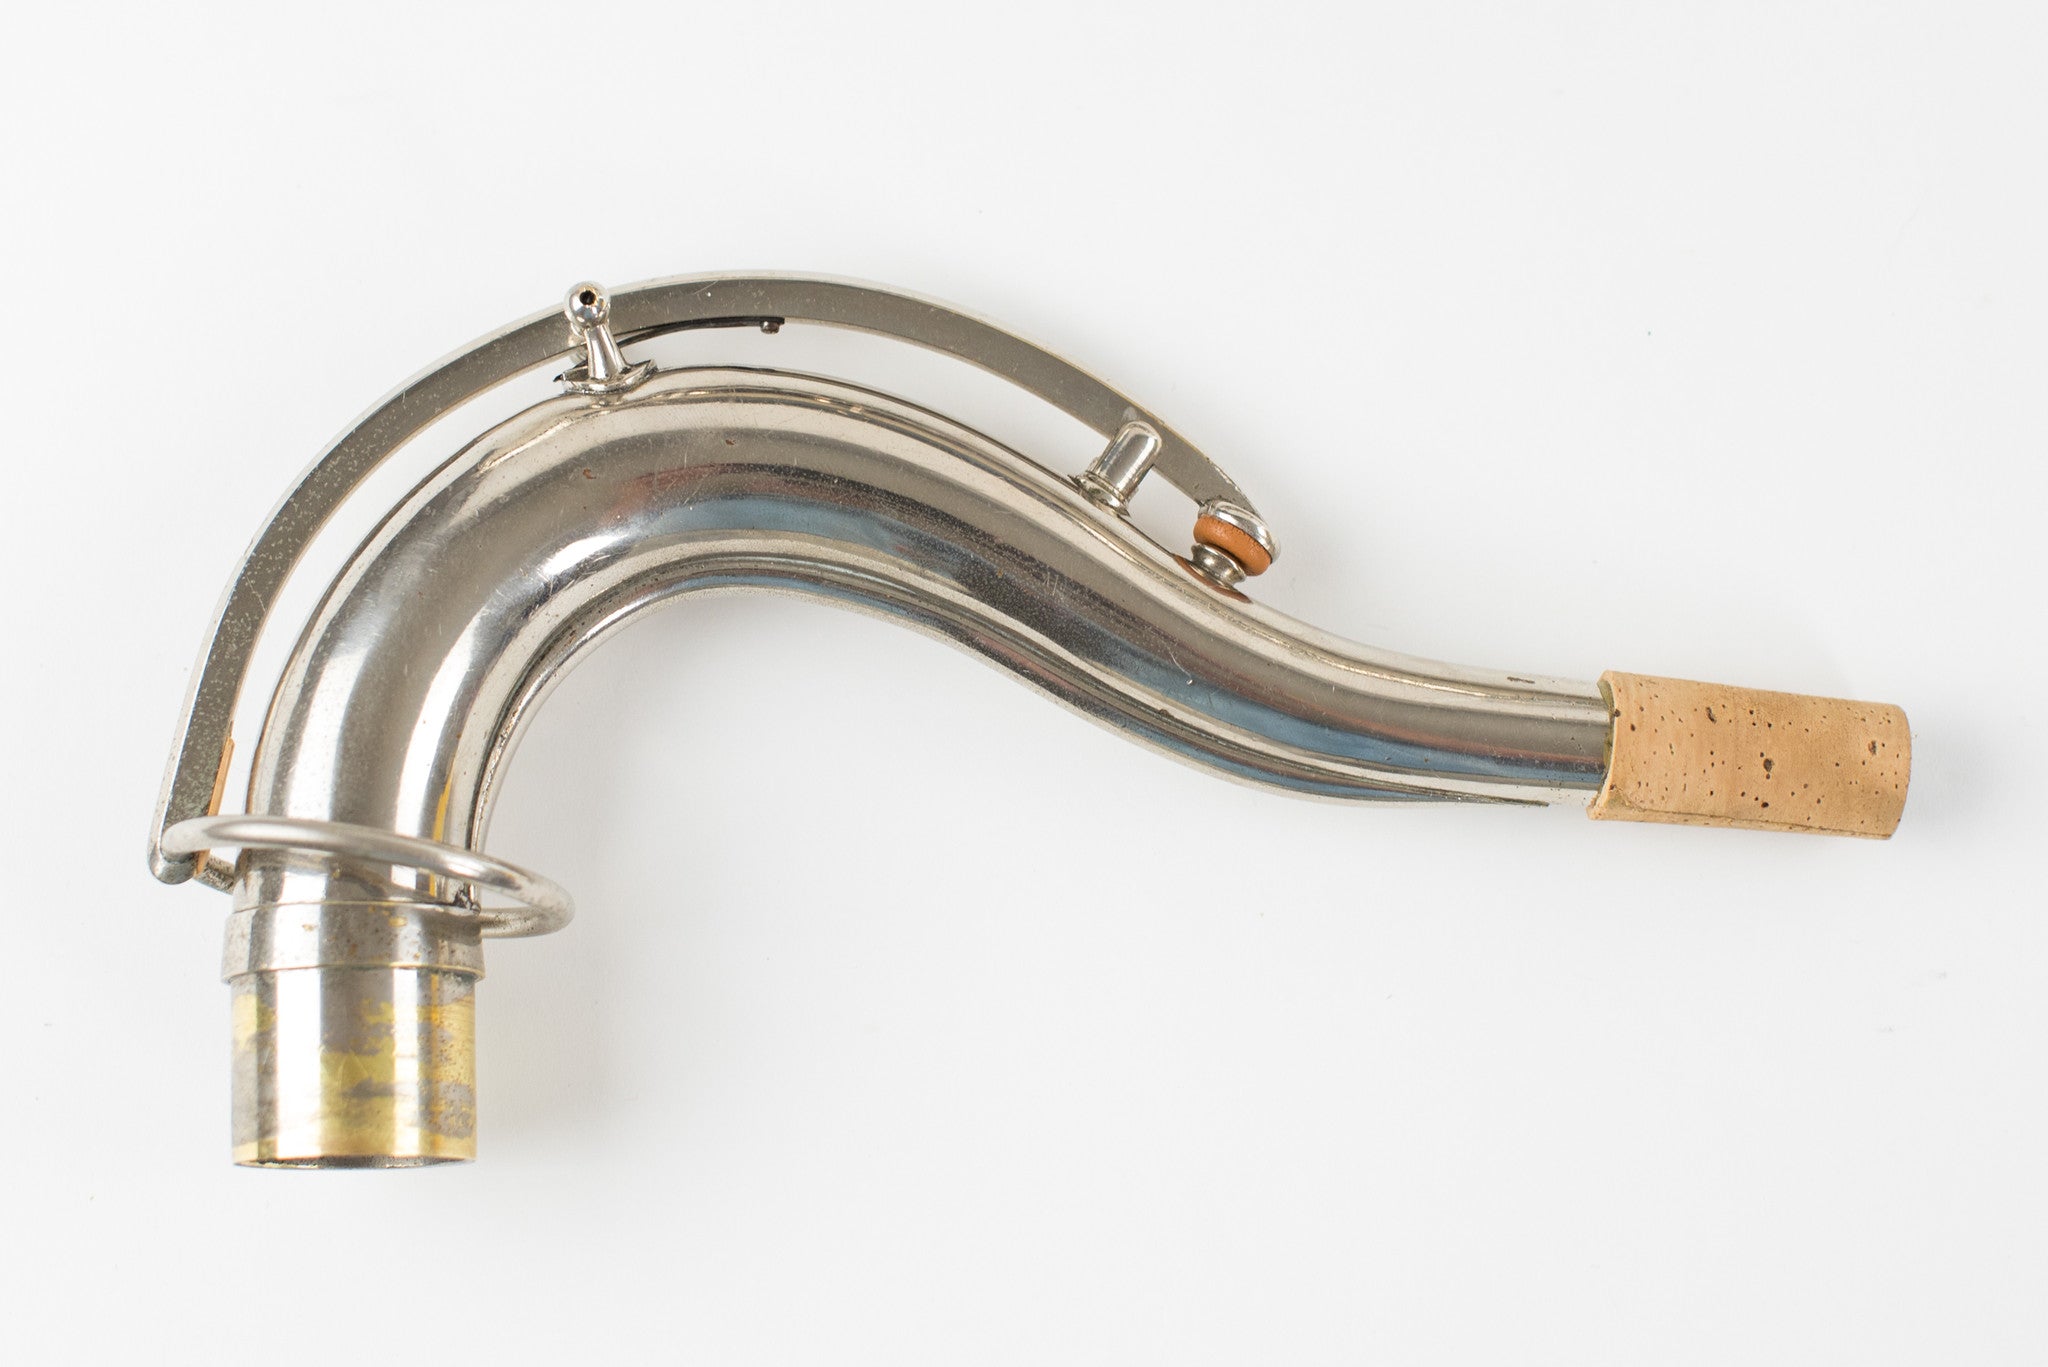 1910 Adolphe Sax Tenor Saxophone Fully Restored